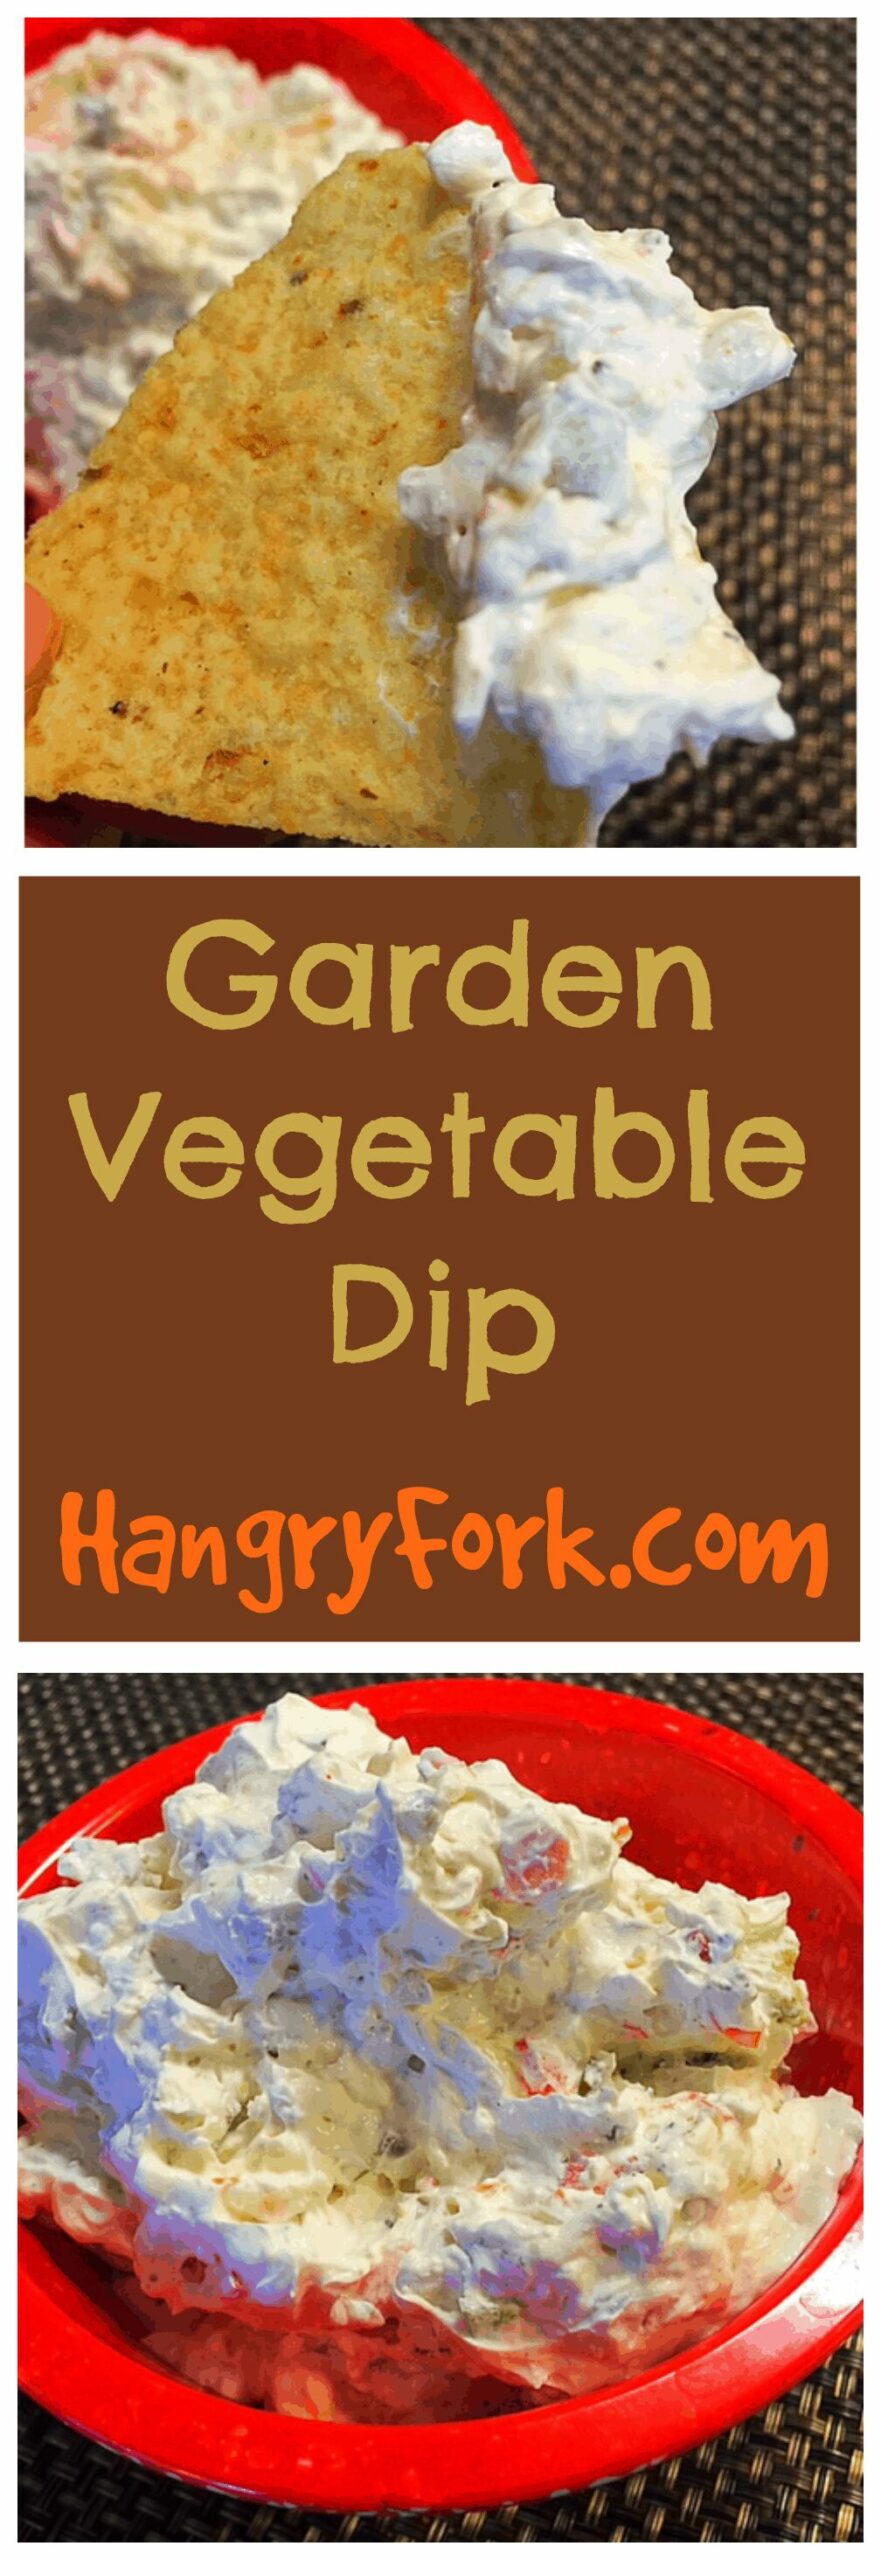 Garden Vegetable Dip